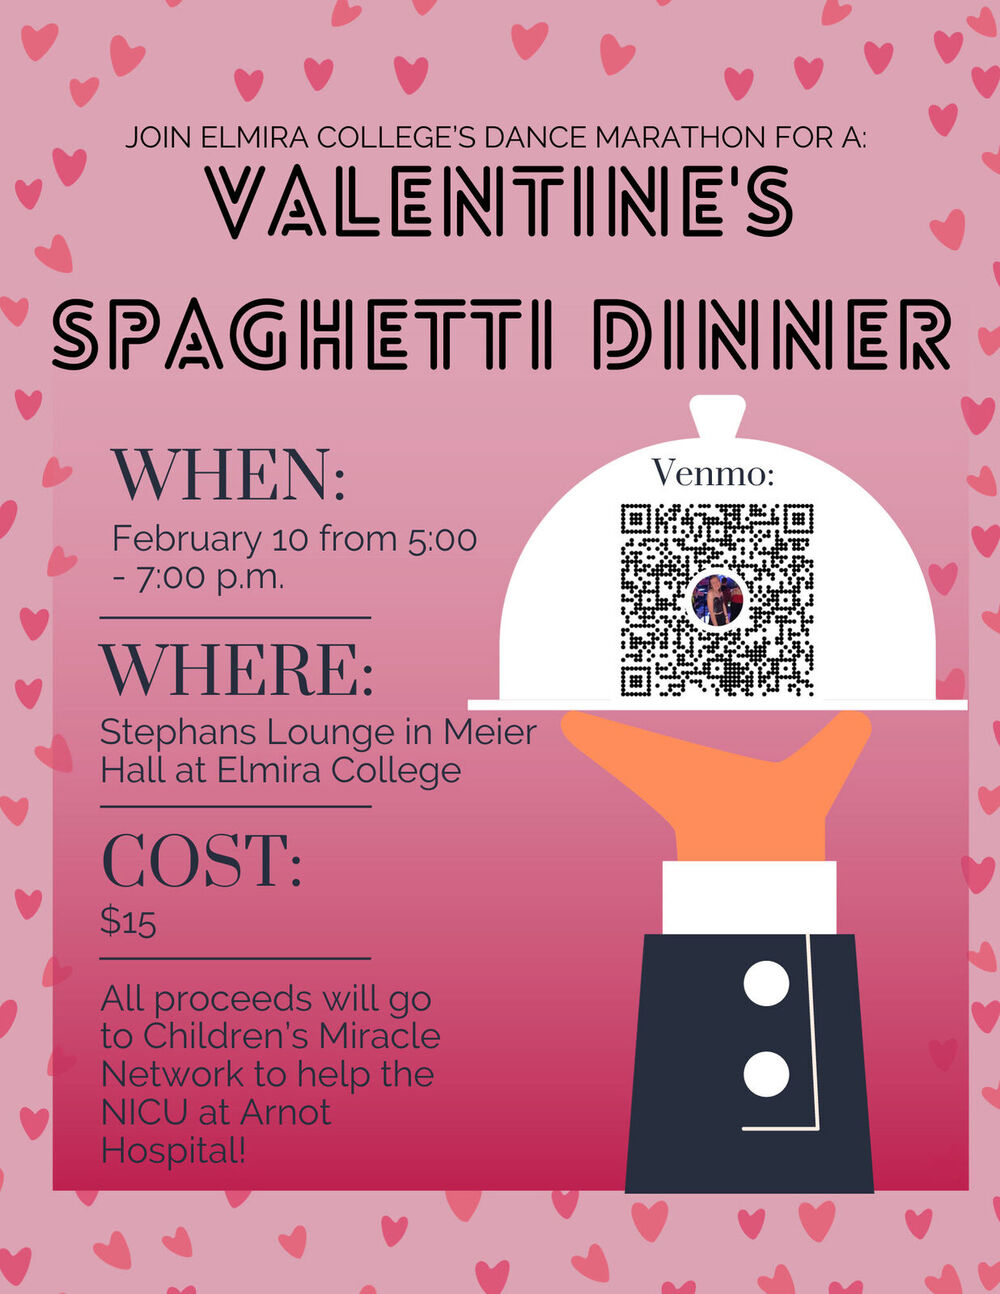 ecdm-valentines-spaghetti-dinner-fundraiser